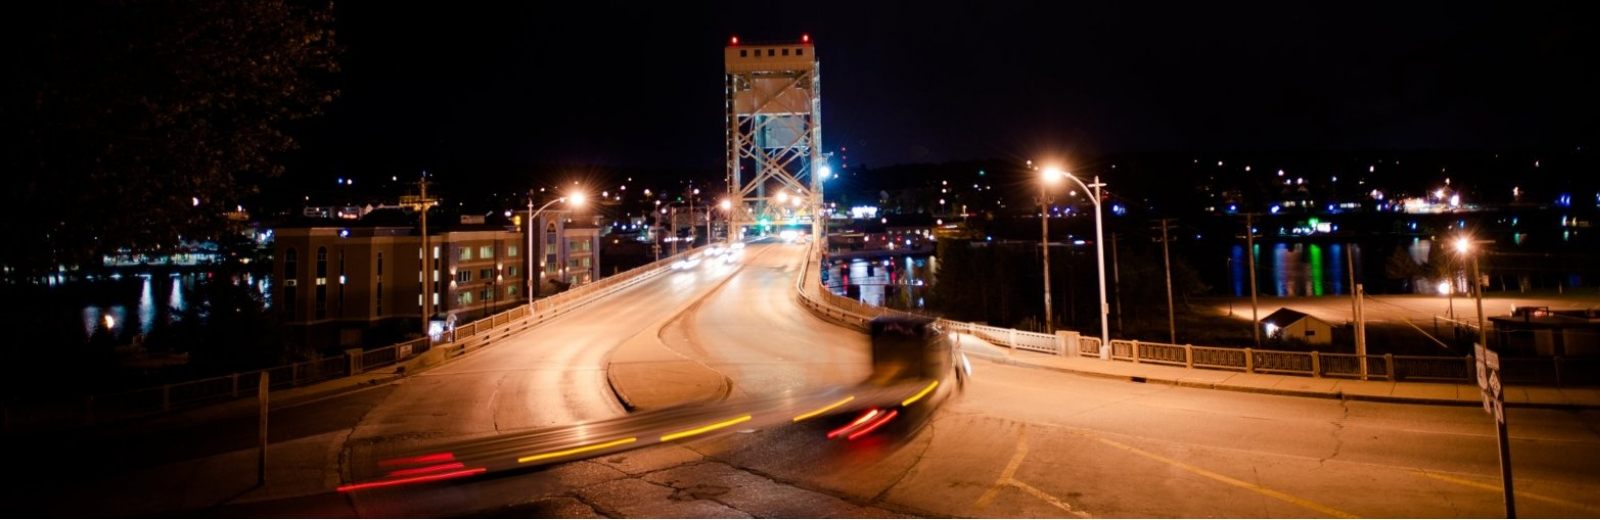 The Portage Lift Bridge at night